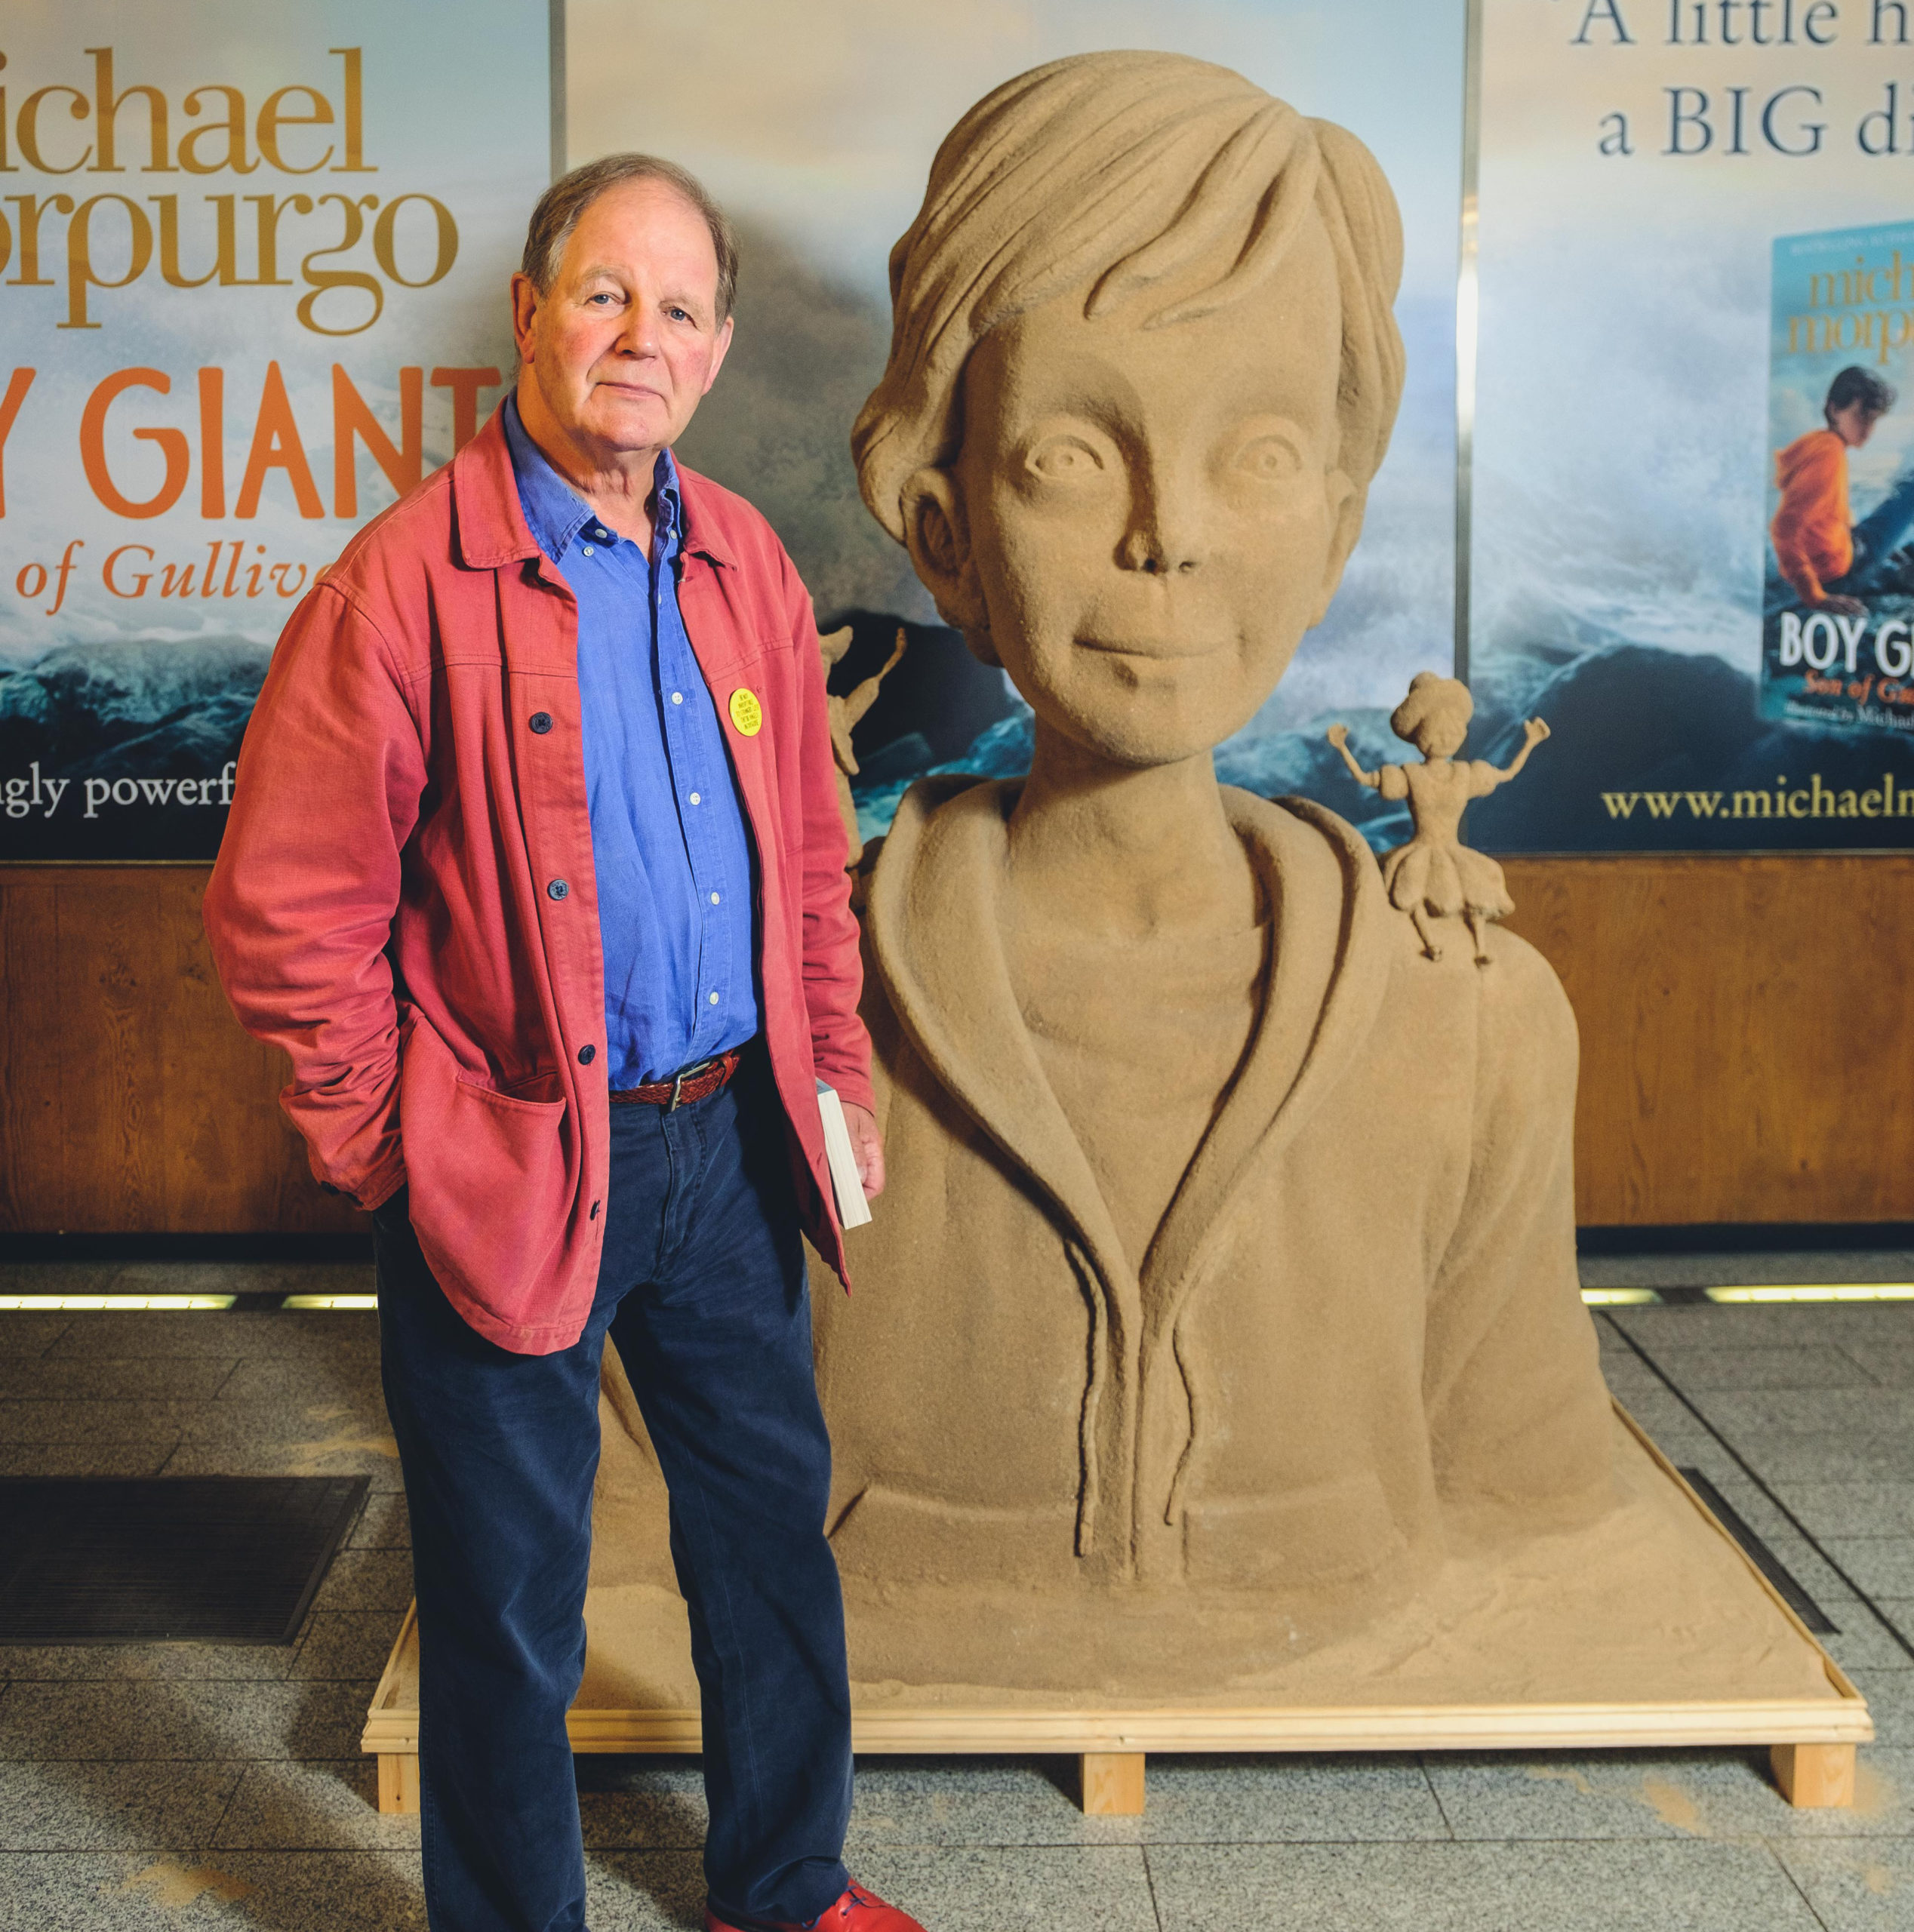 Michael Morpurgo standing next to Boy Giant statue